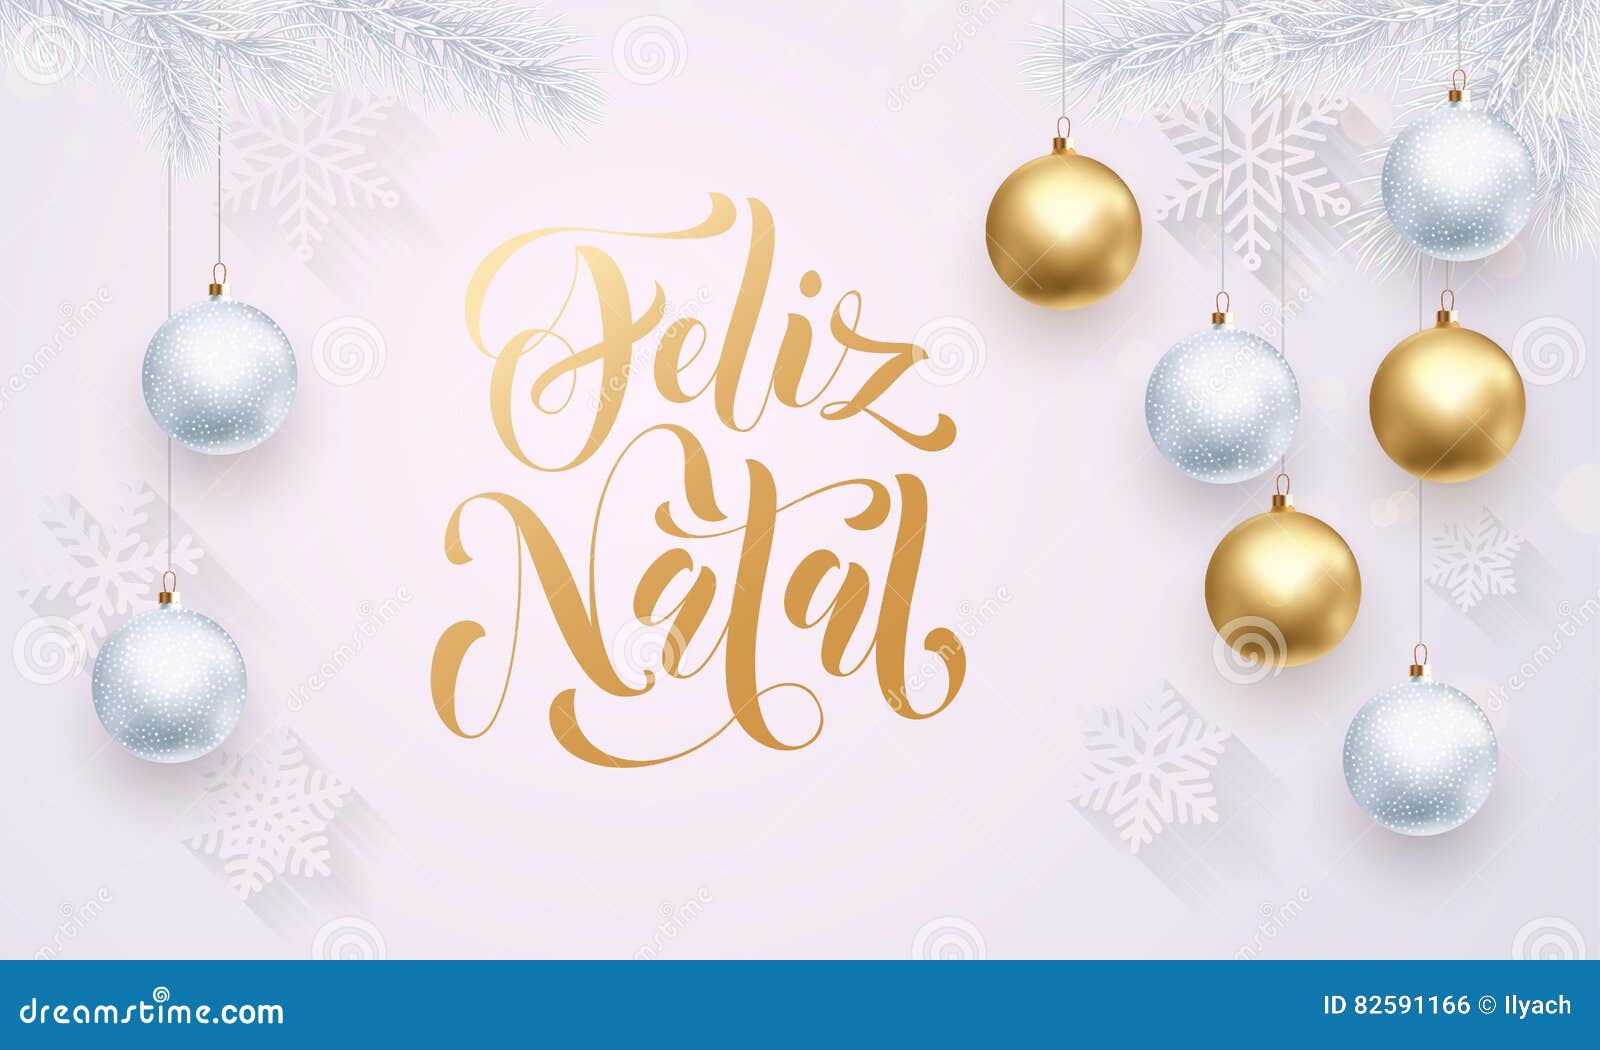 portuguese merry christmas feliz natal decoration golden ball white greeting